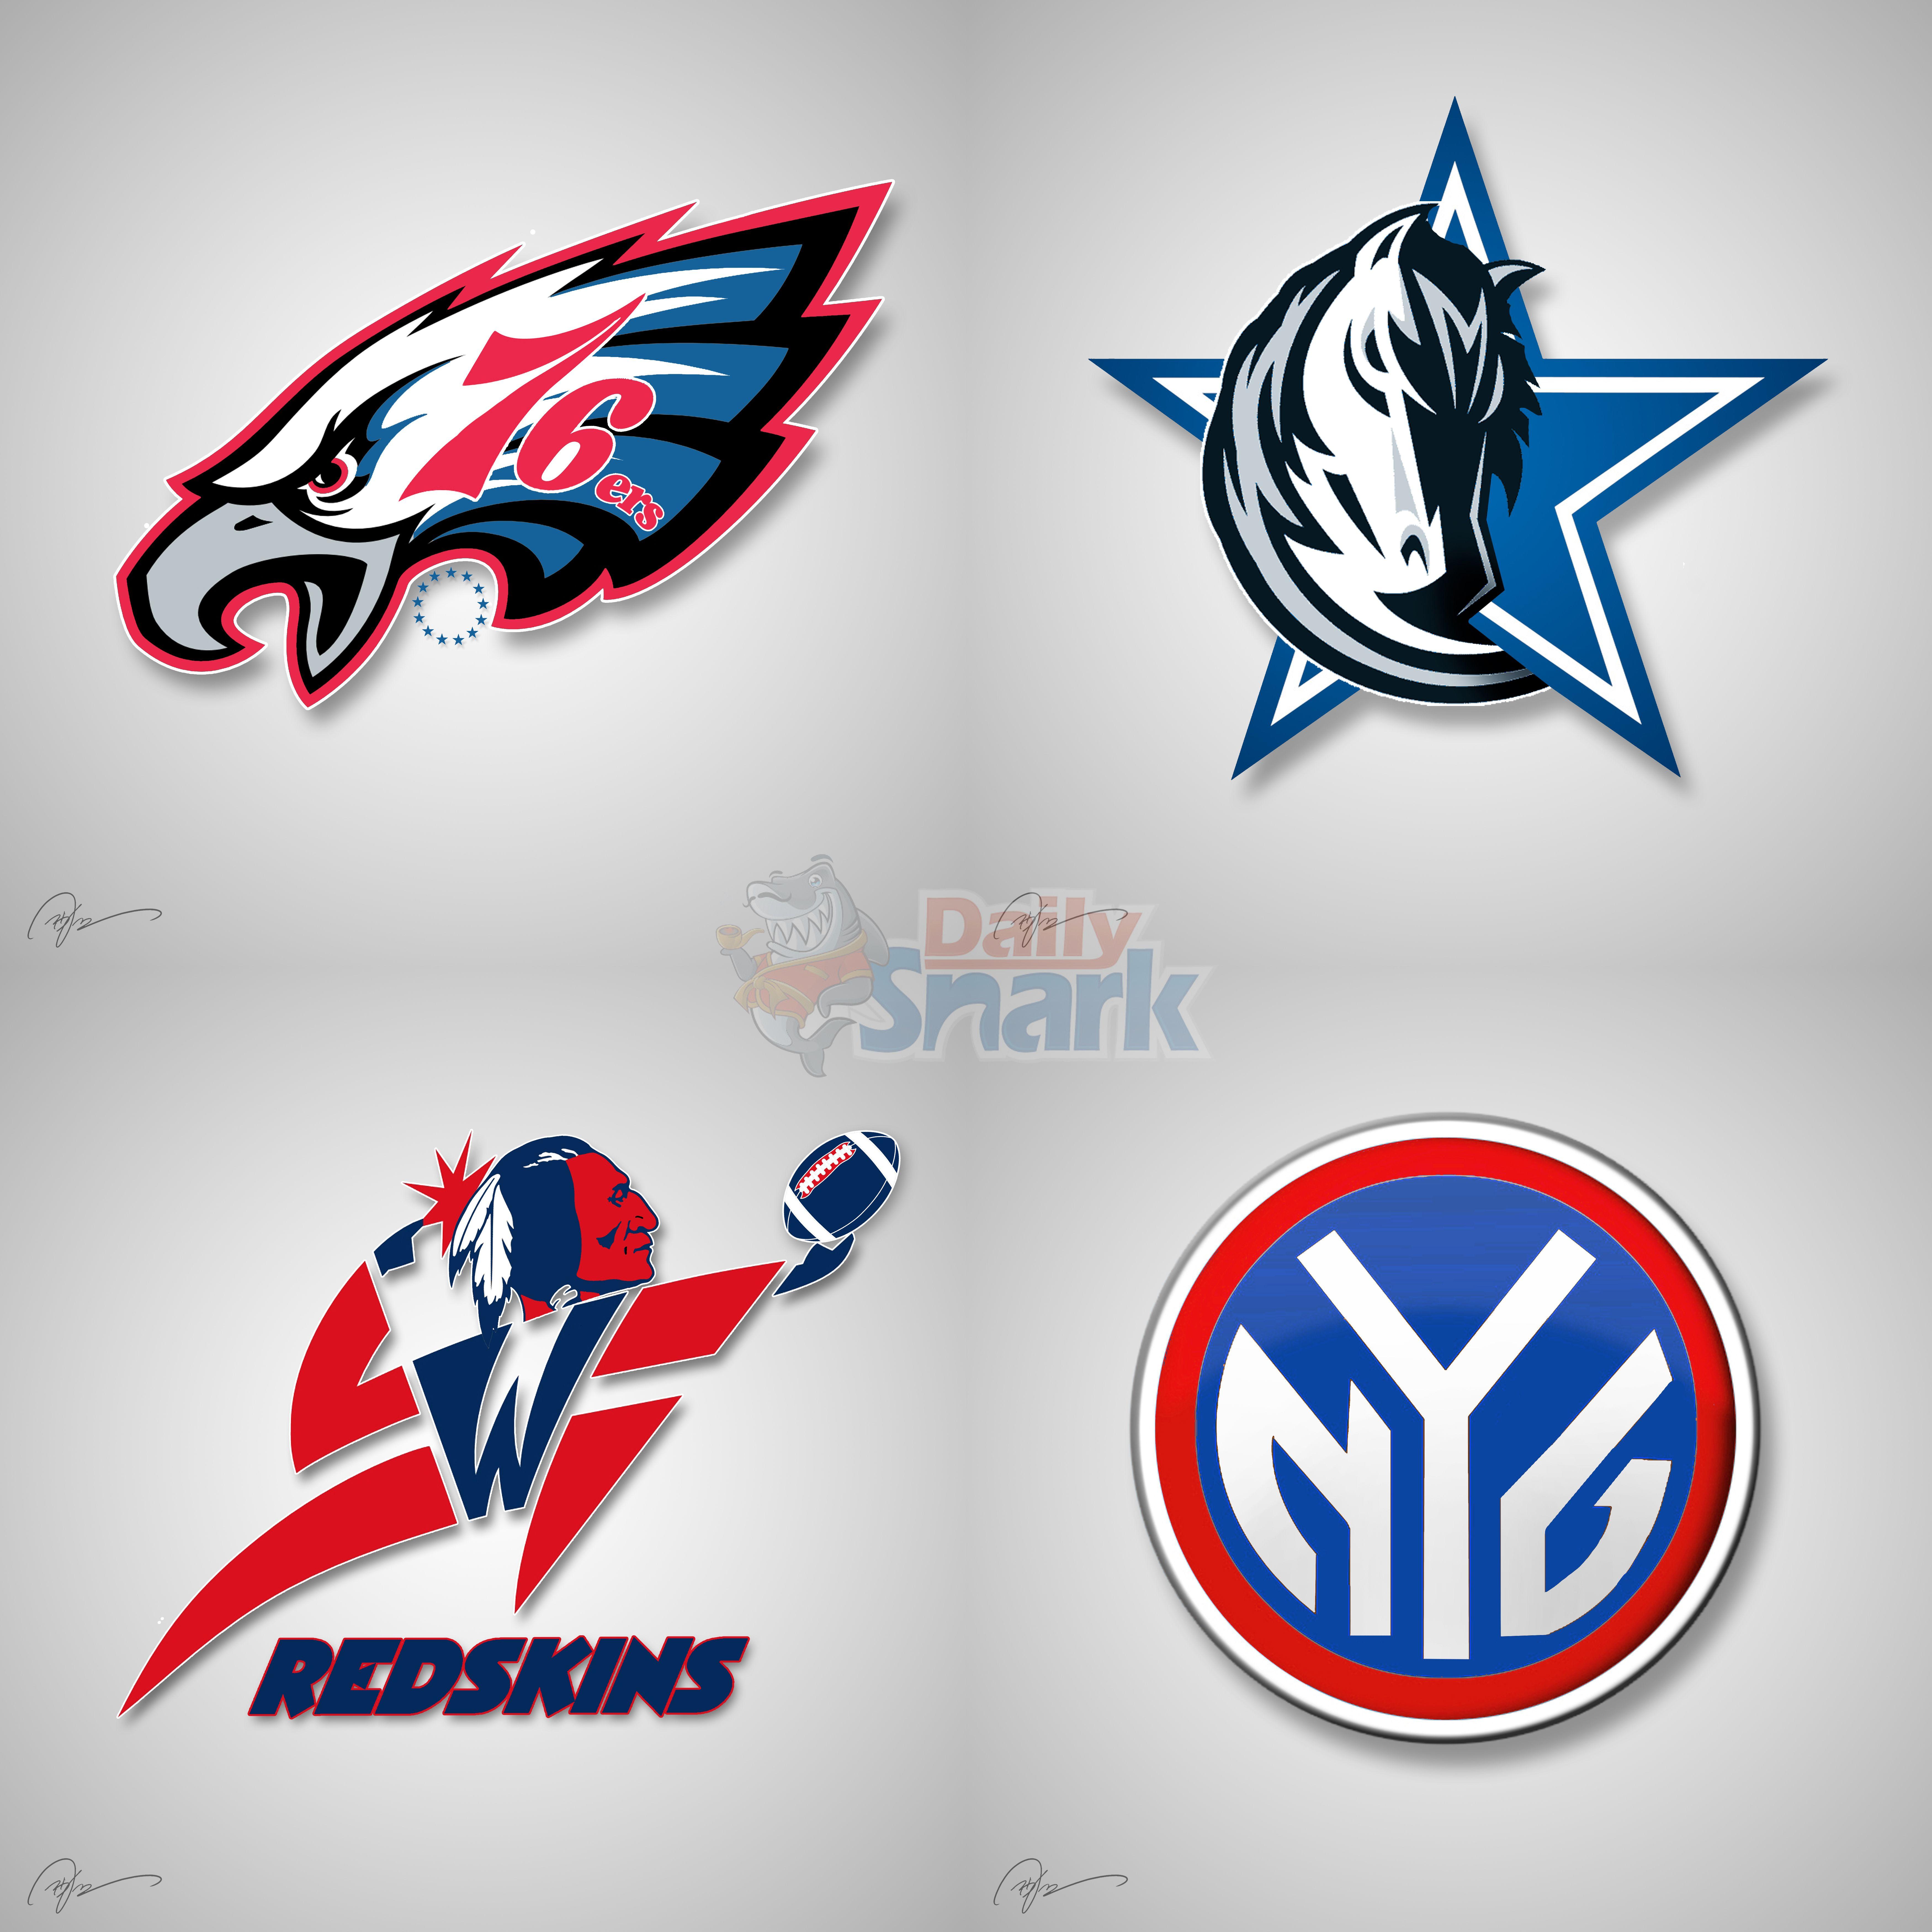 Cool NFL Logo - Cool NFL-MLB Logo Combinations 9/23/14 | FOOTBALL FRENZY